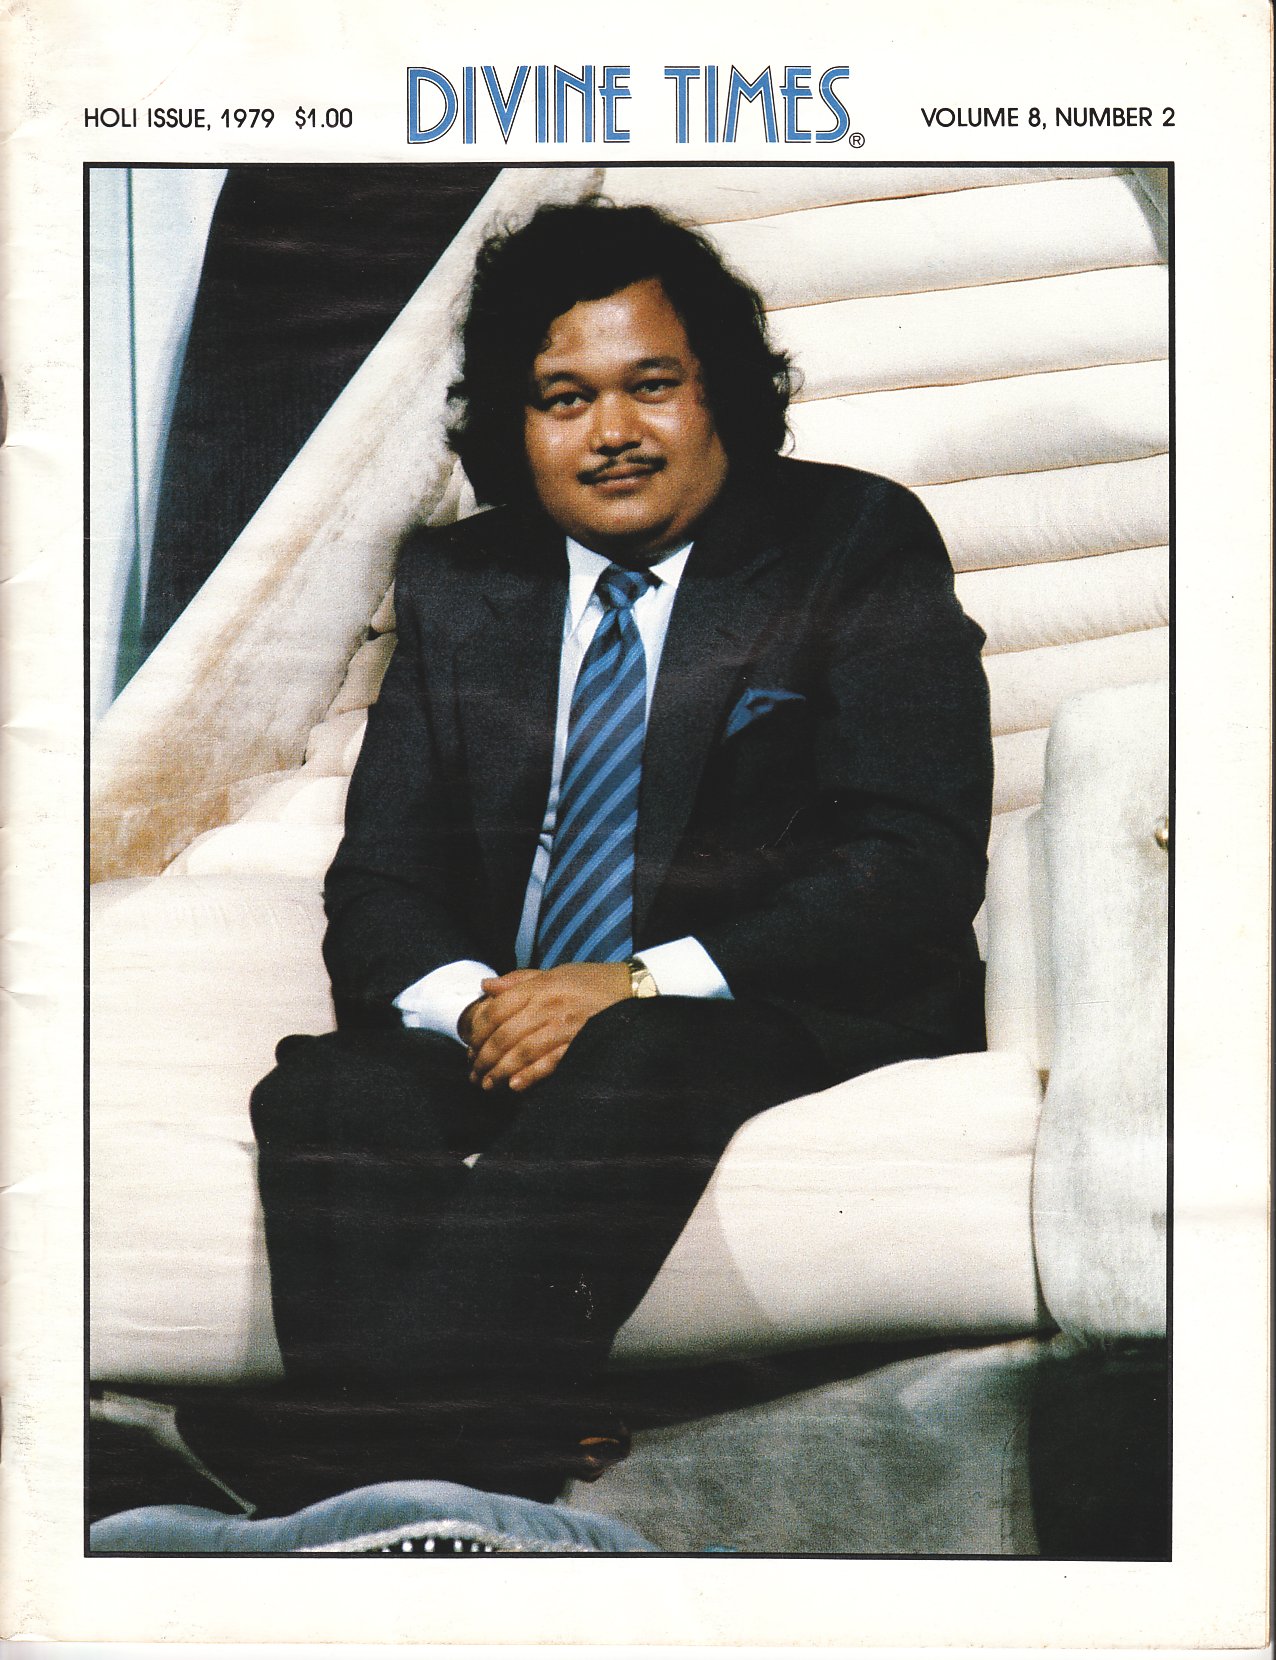 Prem Rawat Inspirational Speaker Divine Times Magazine Holi Issue, 1979 Volume 8, Number 2 Cover